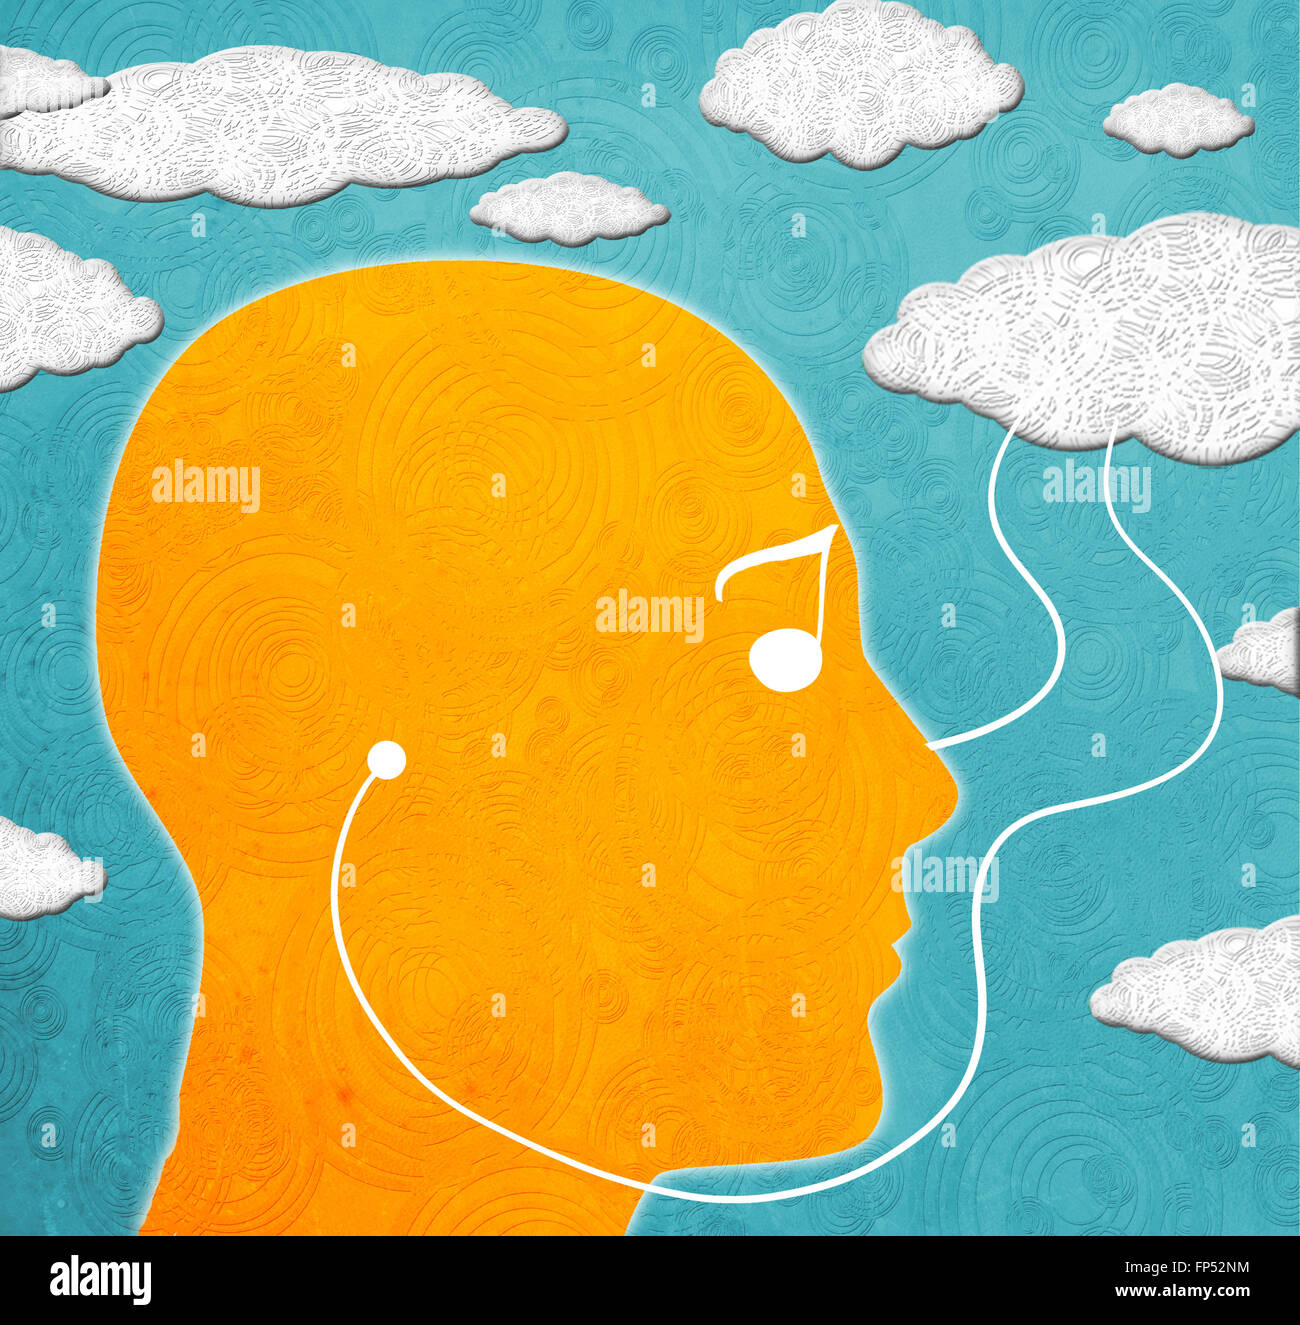 cloud computing music digital illustration Stock Photo